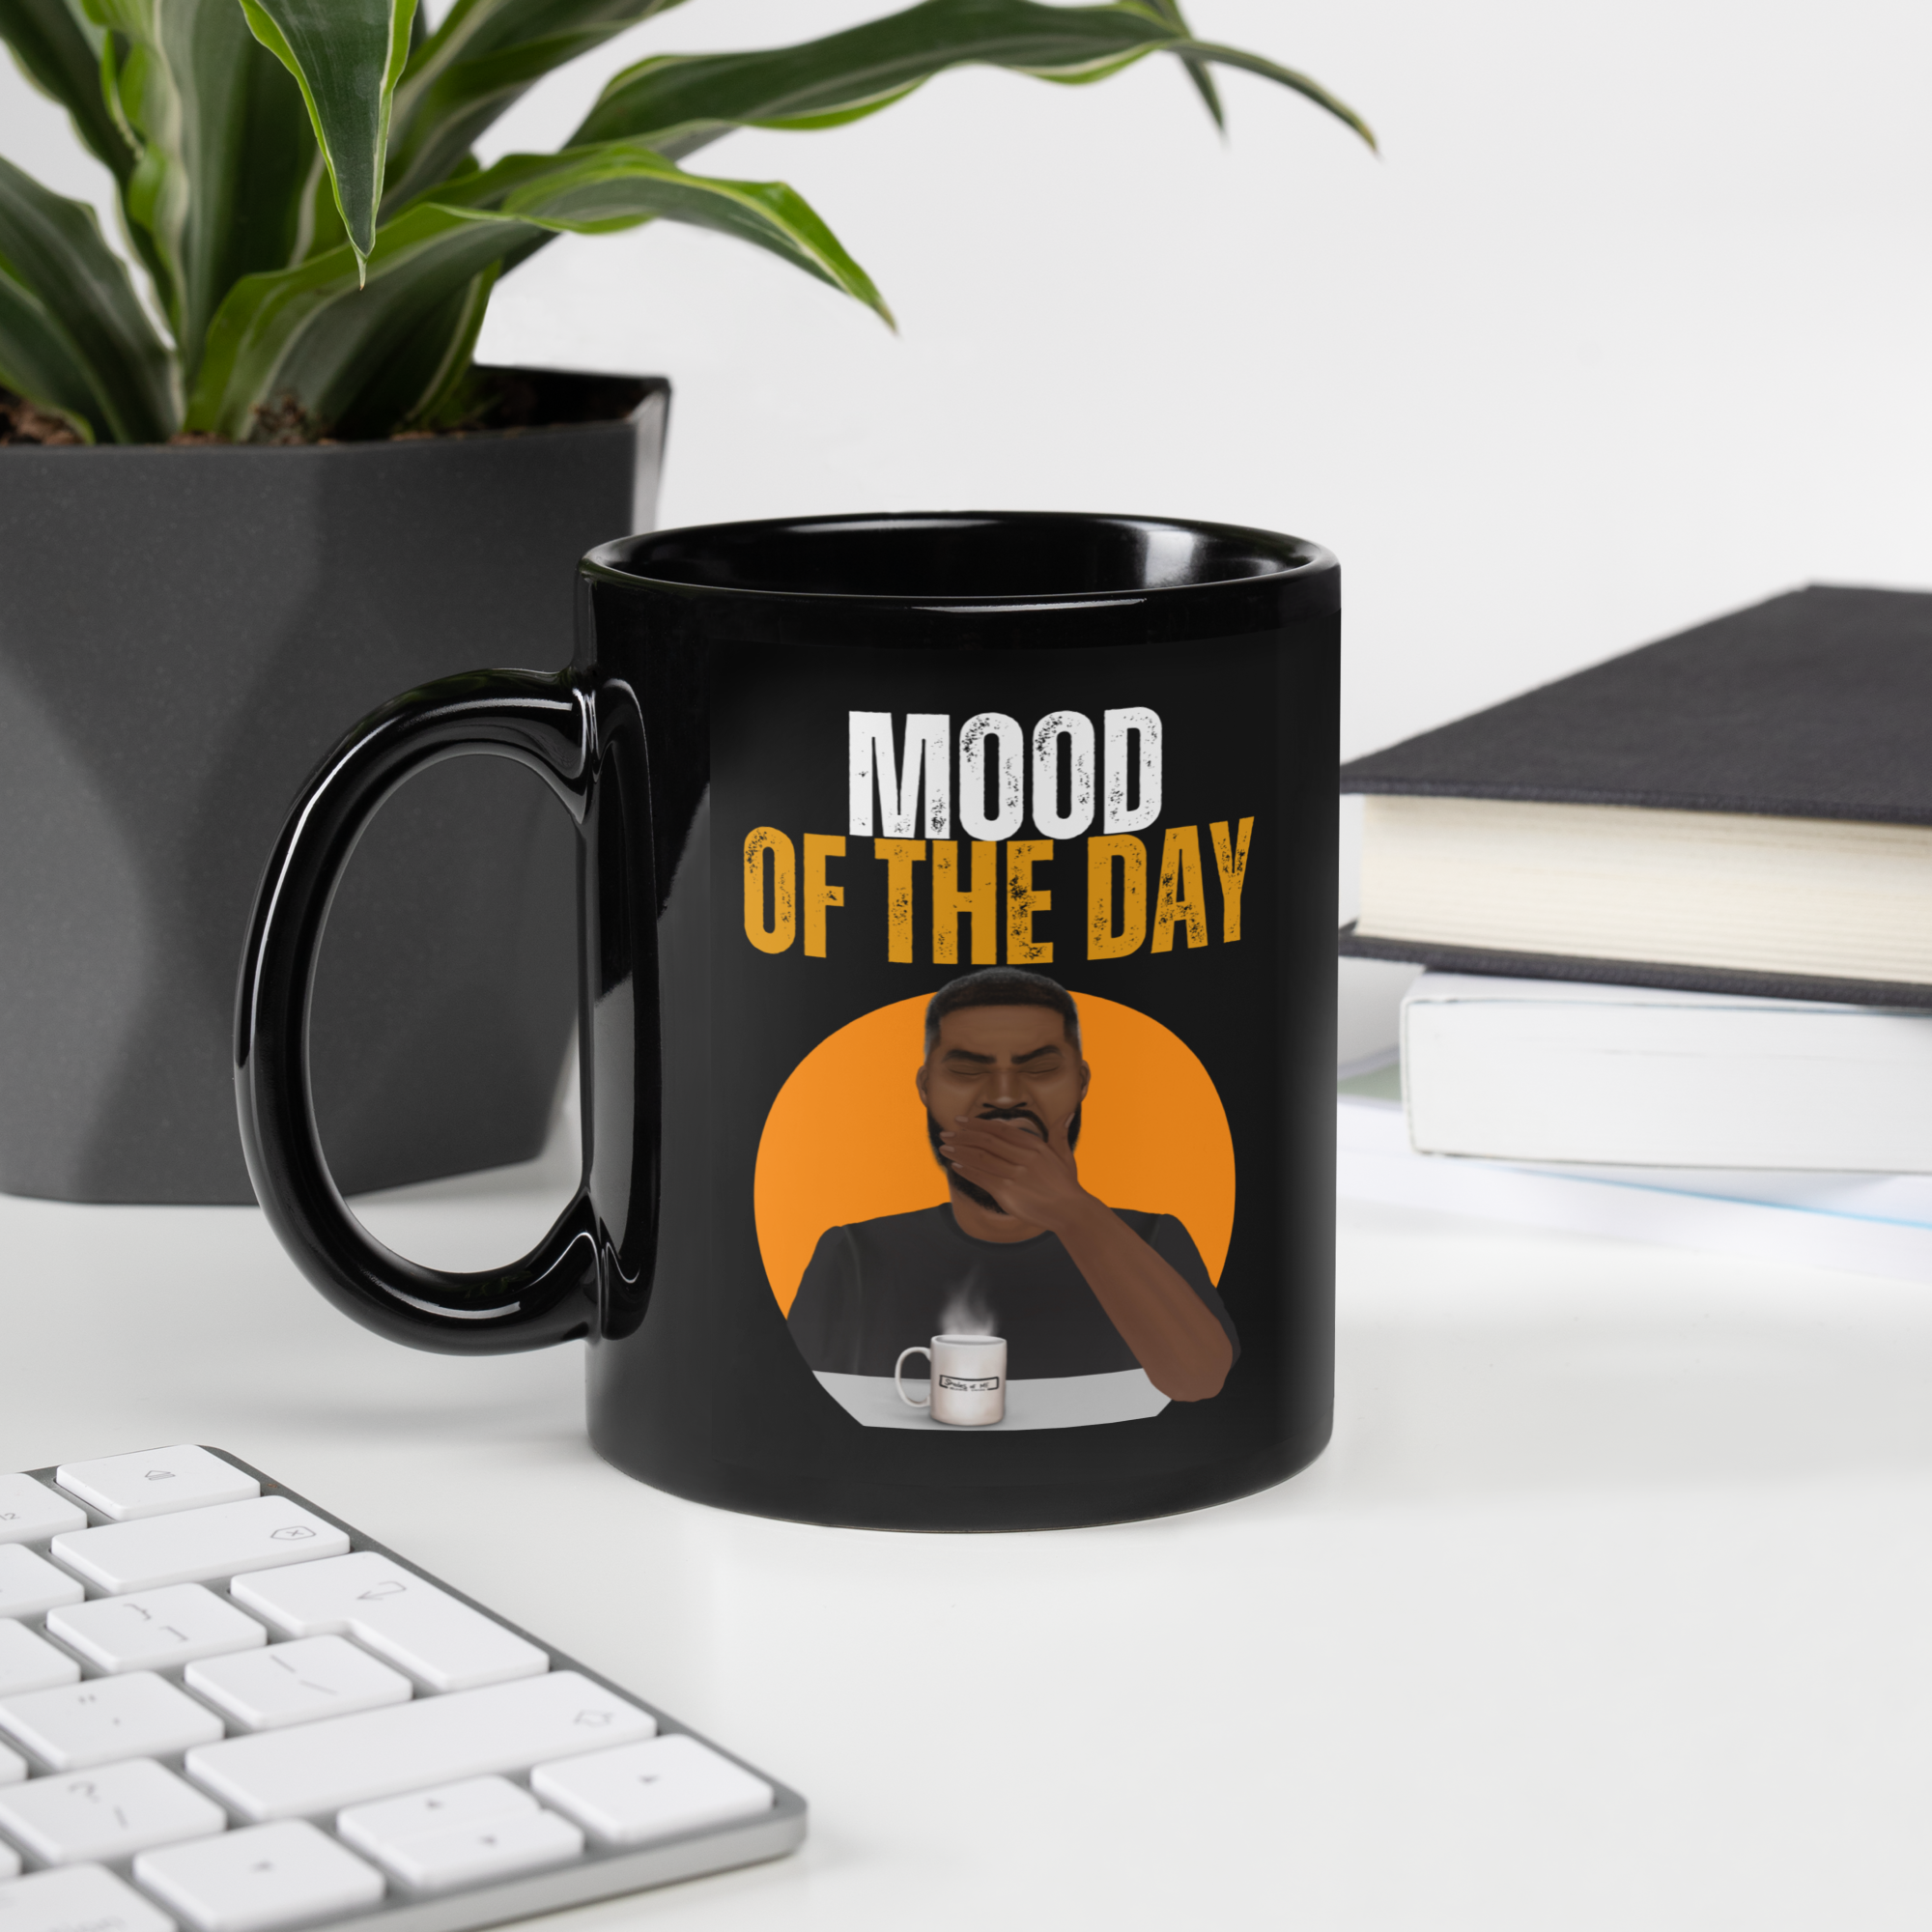 Mood of the Day Mug - Tired (Black Man)